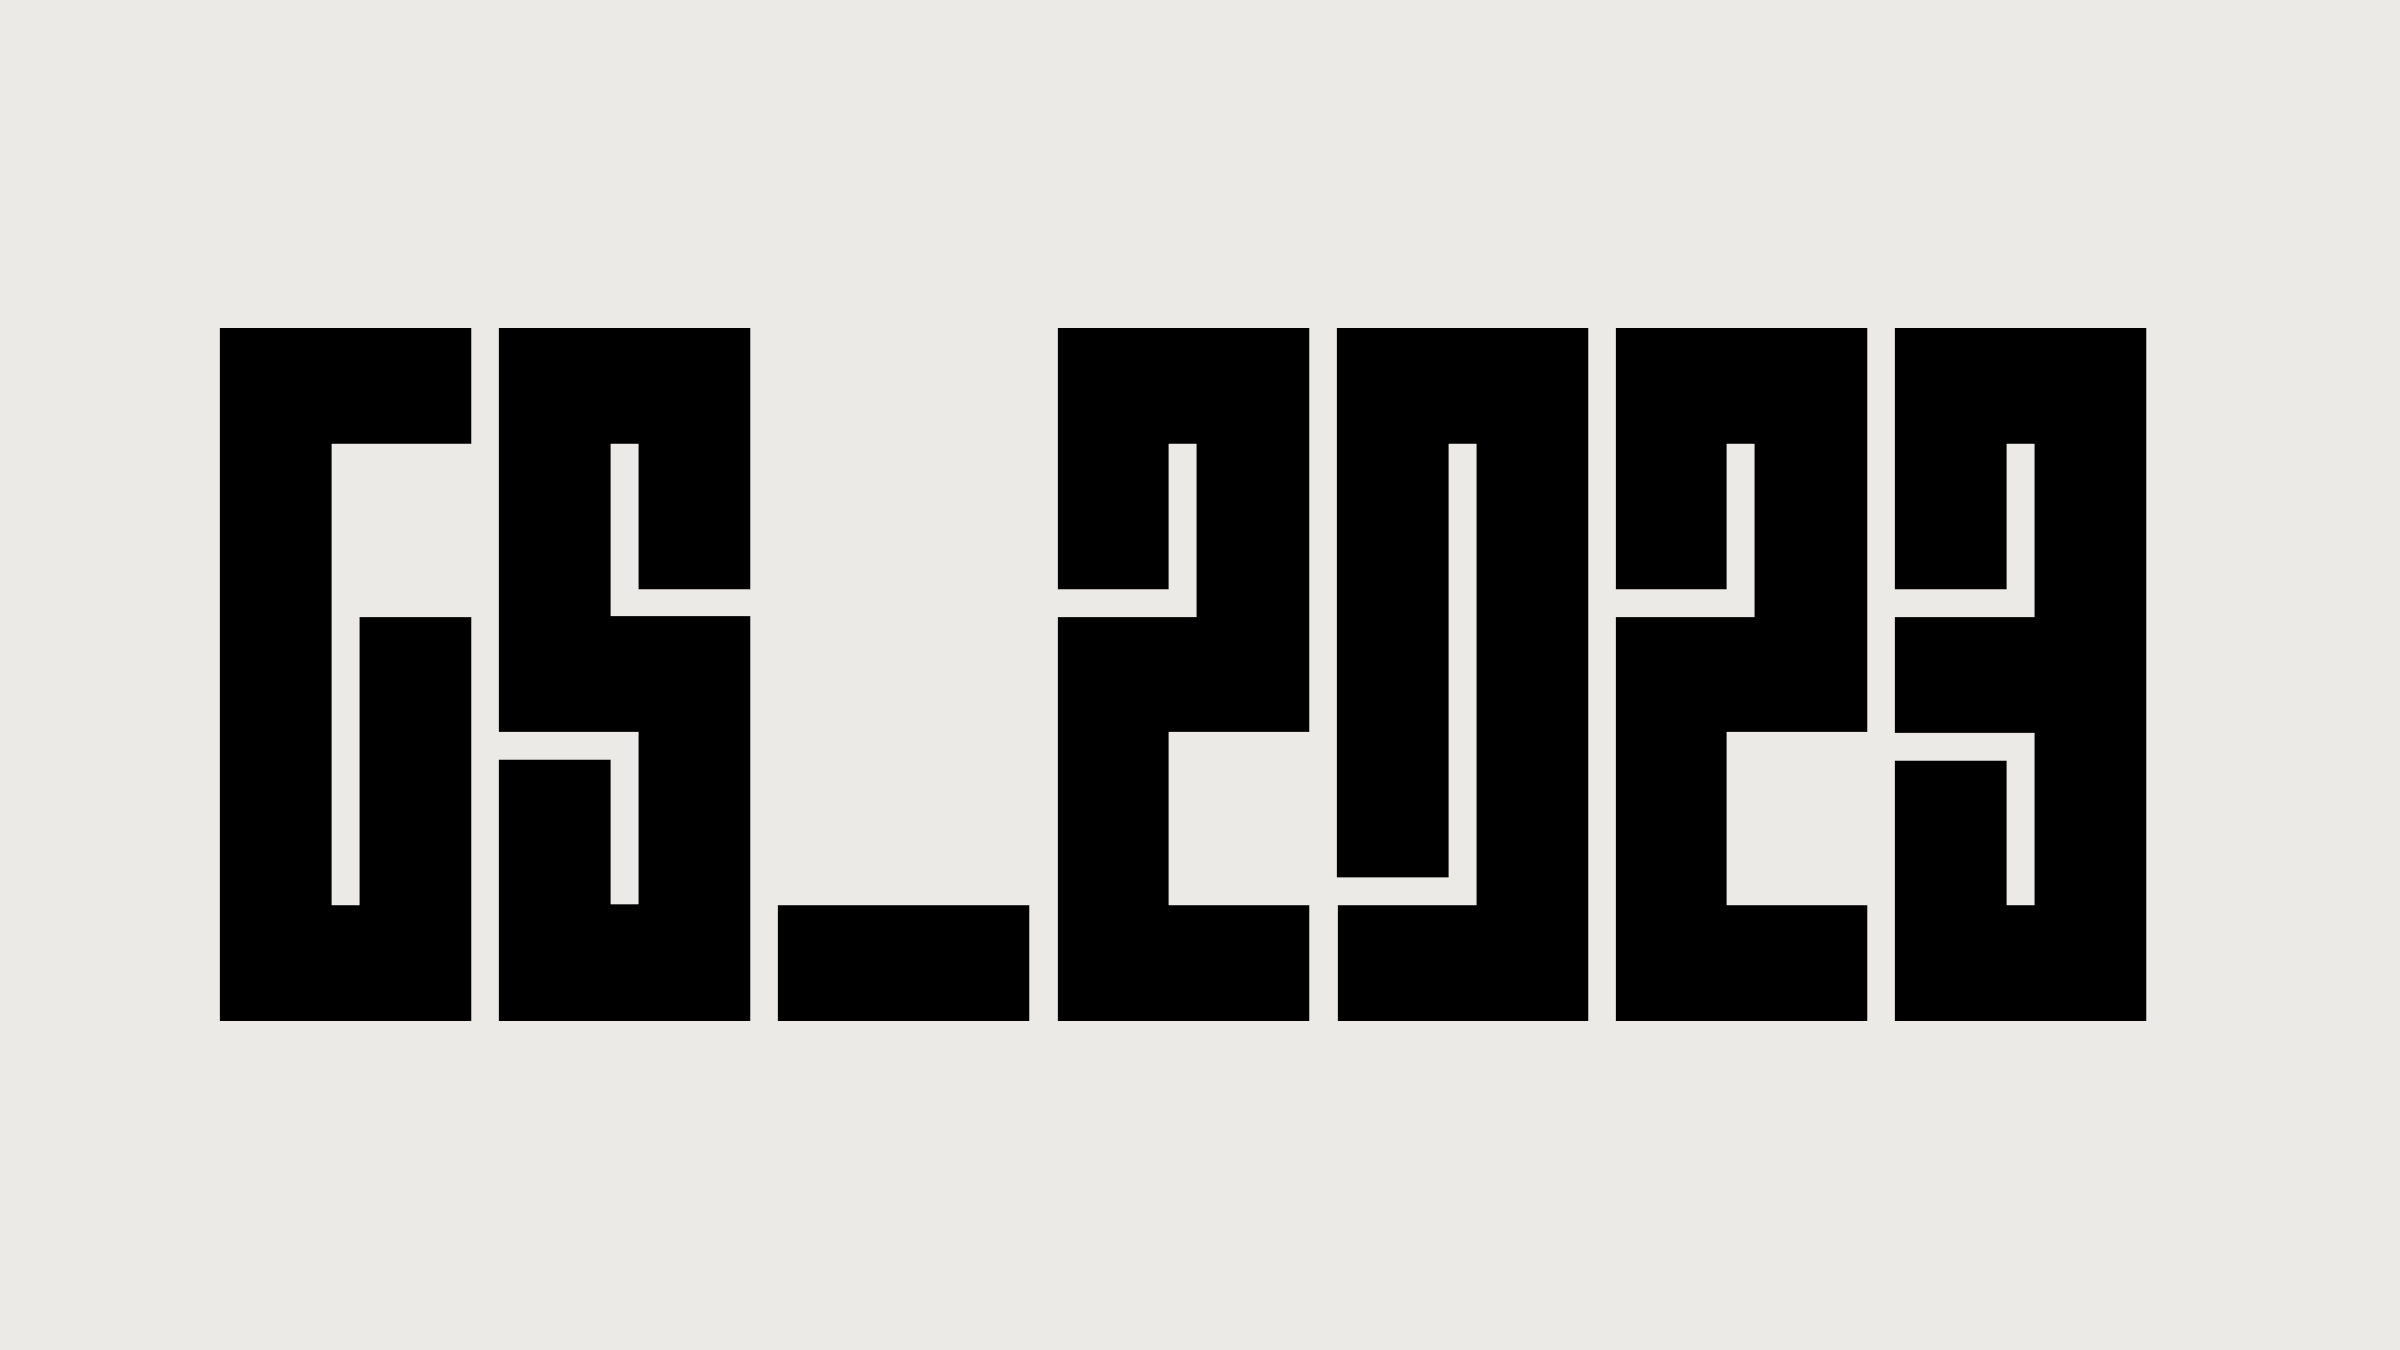 Gebr. Silvestri Typefaces